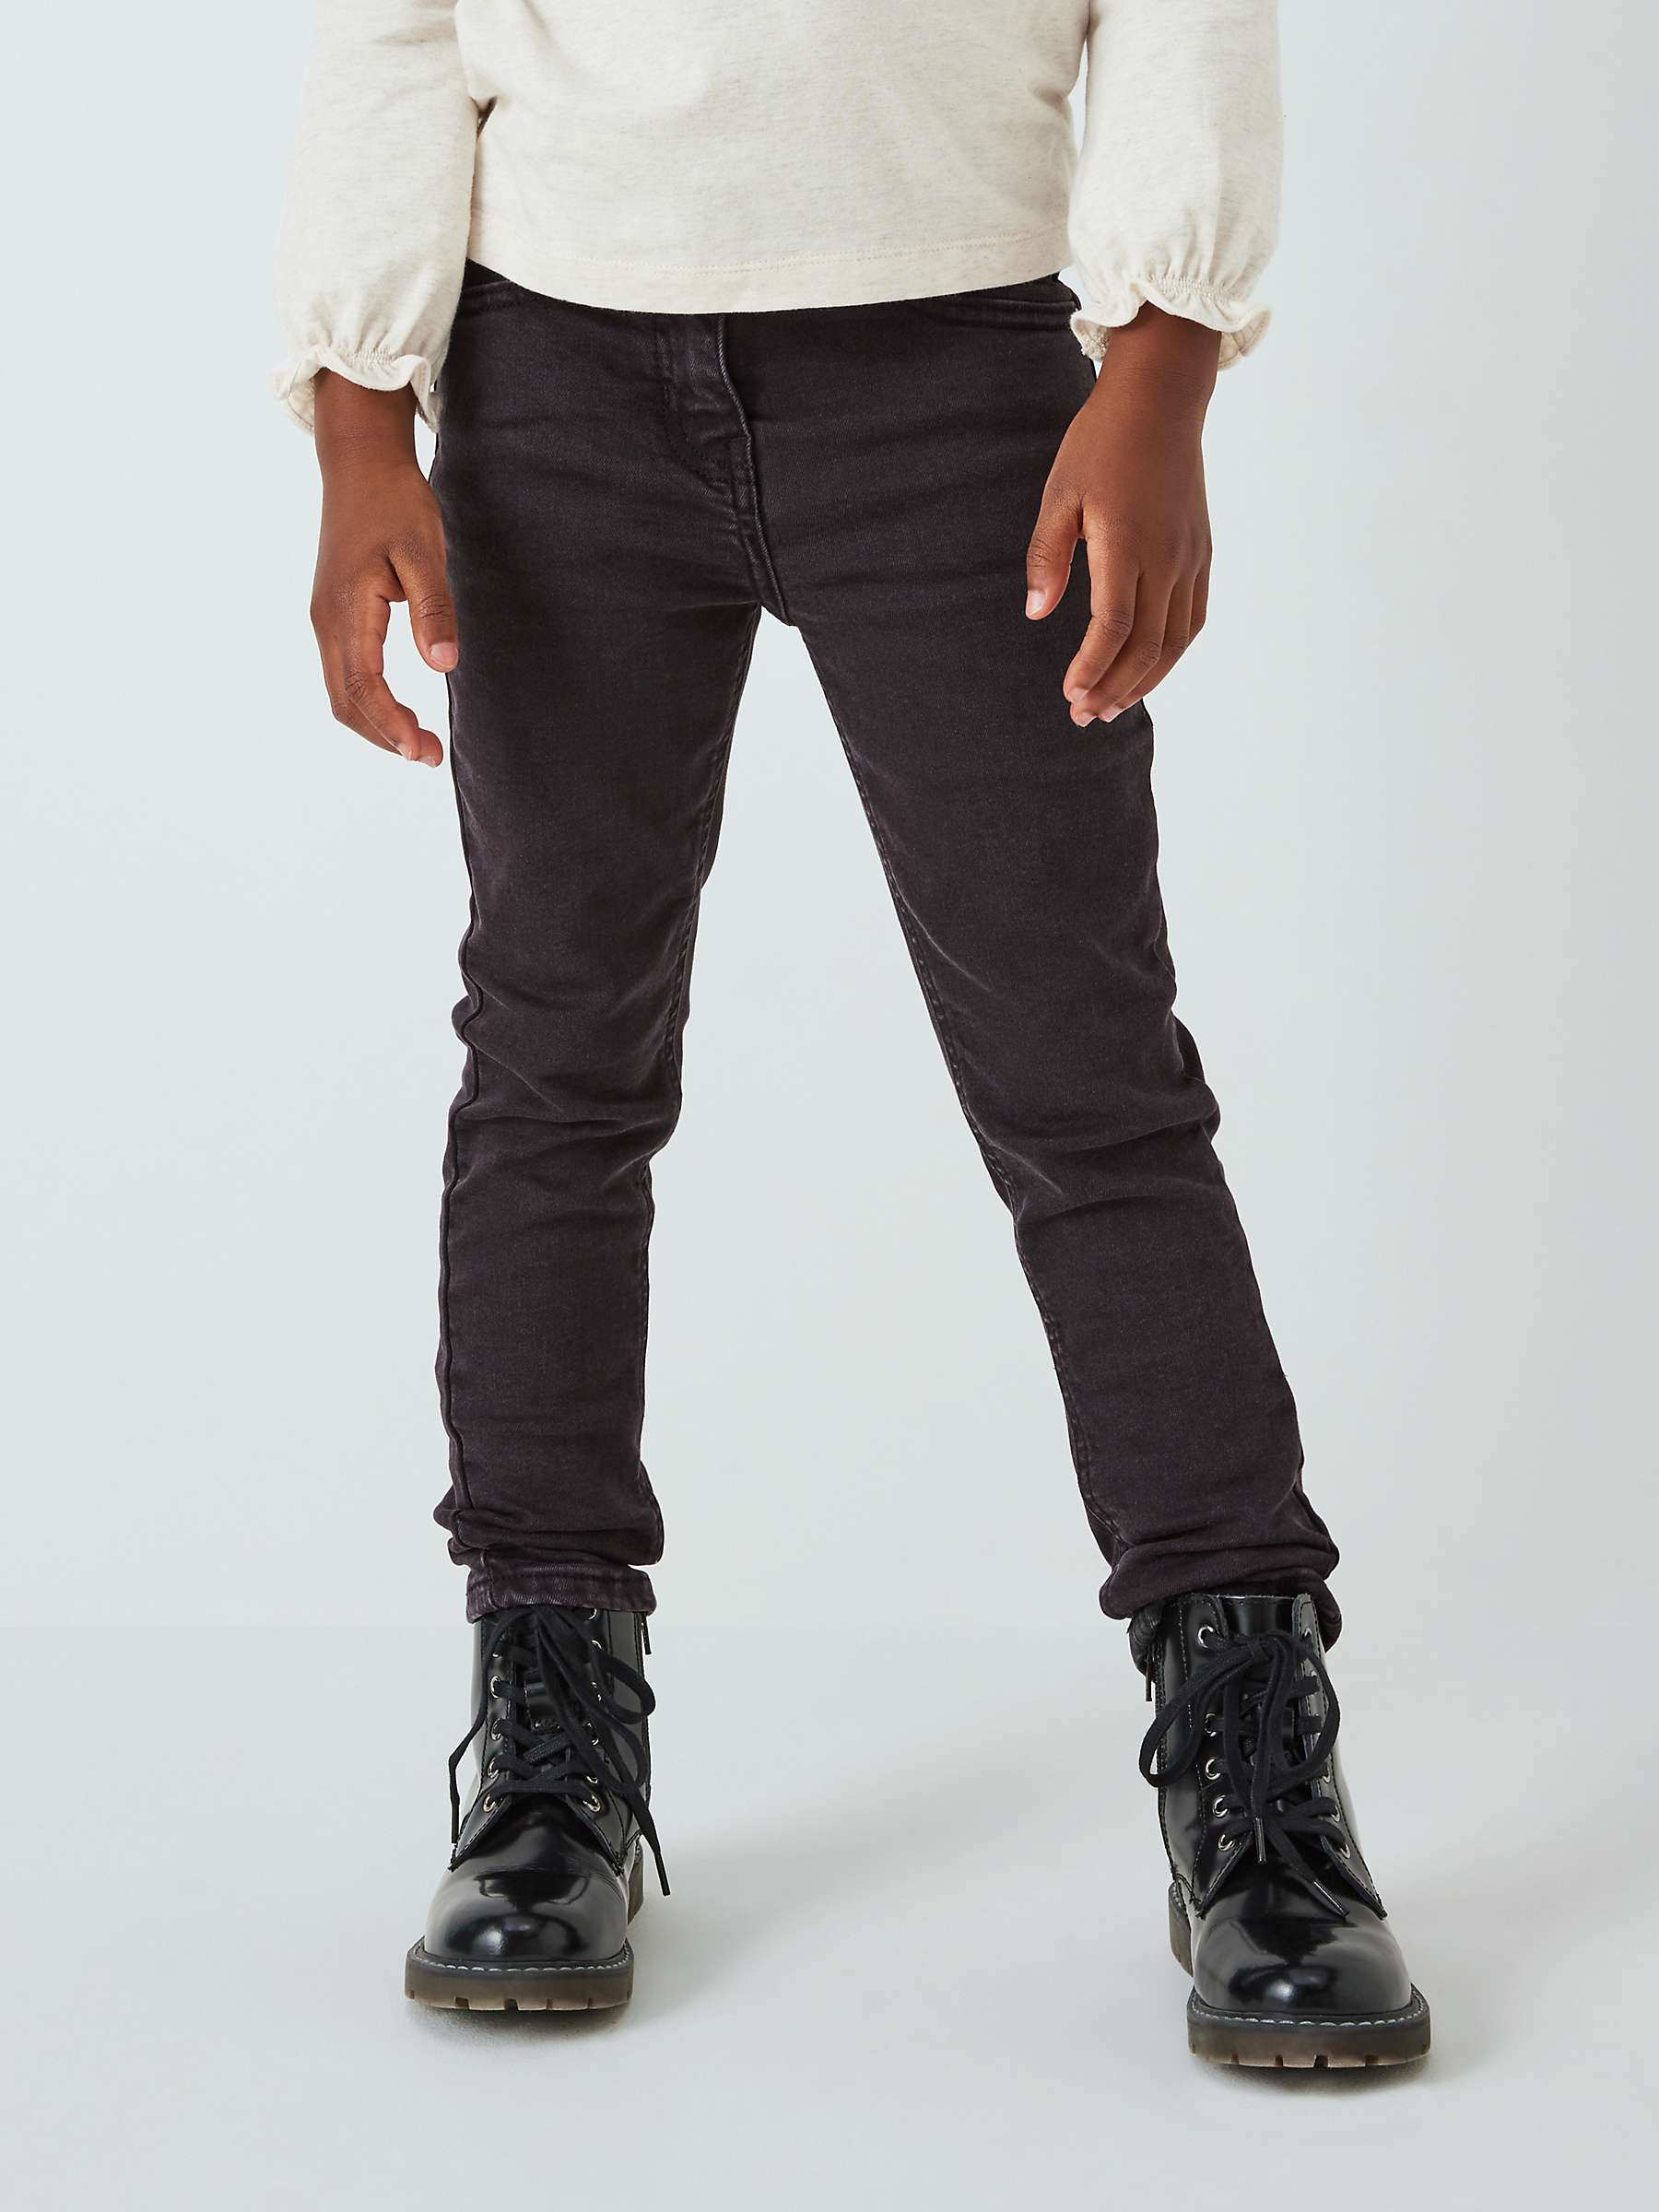 Buy John Lewis Girl's Skinny Jeans, Black Wash Online at johnlewis.com